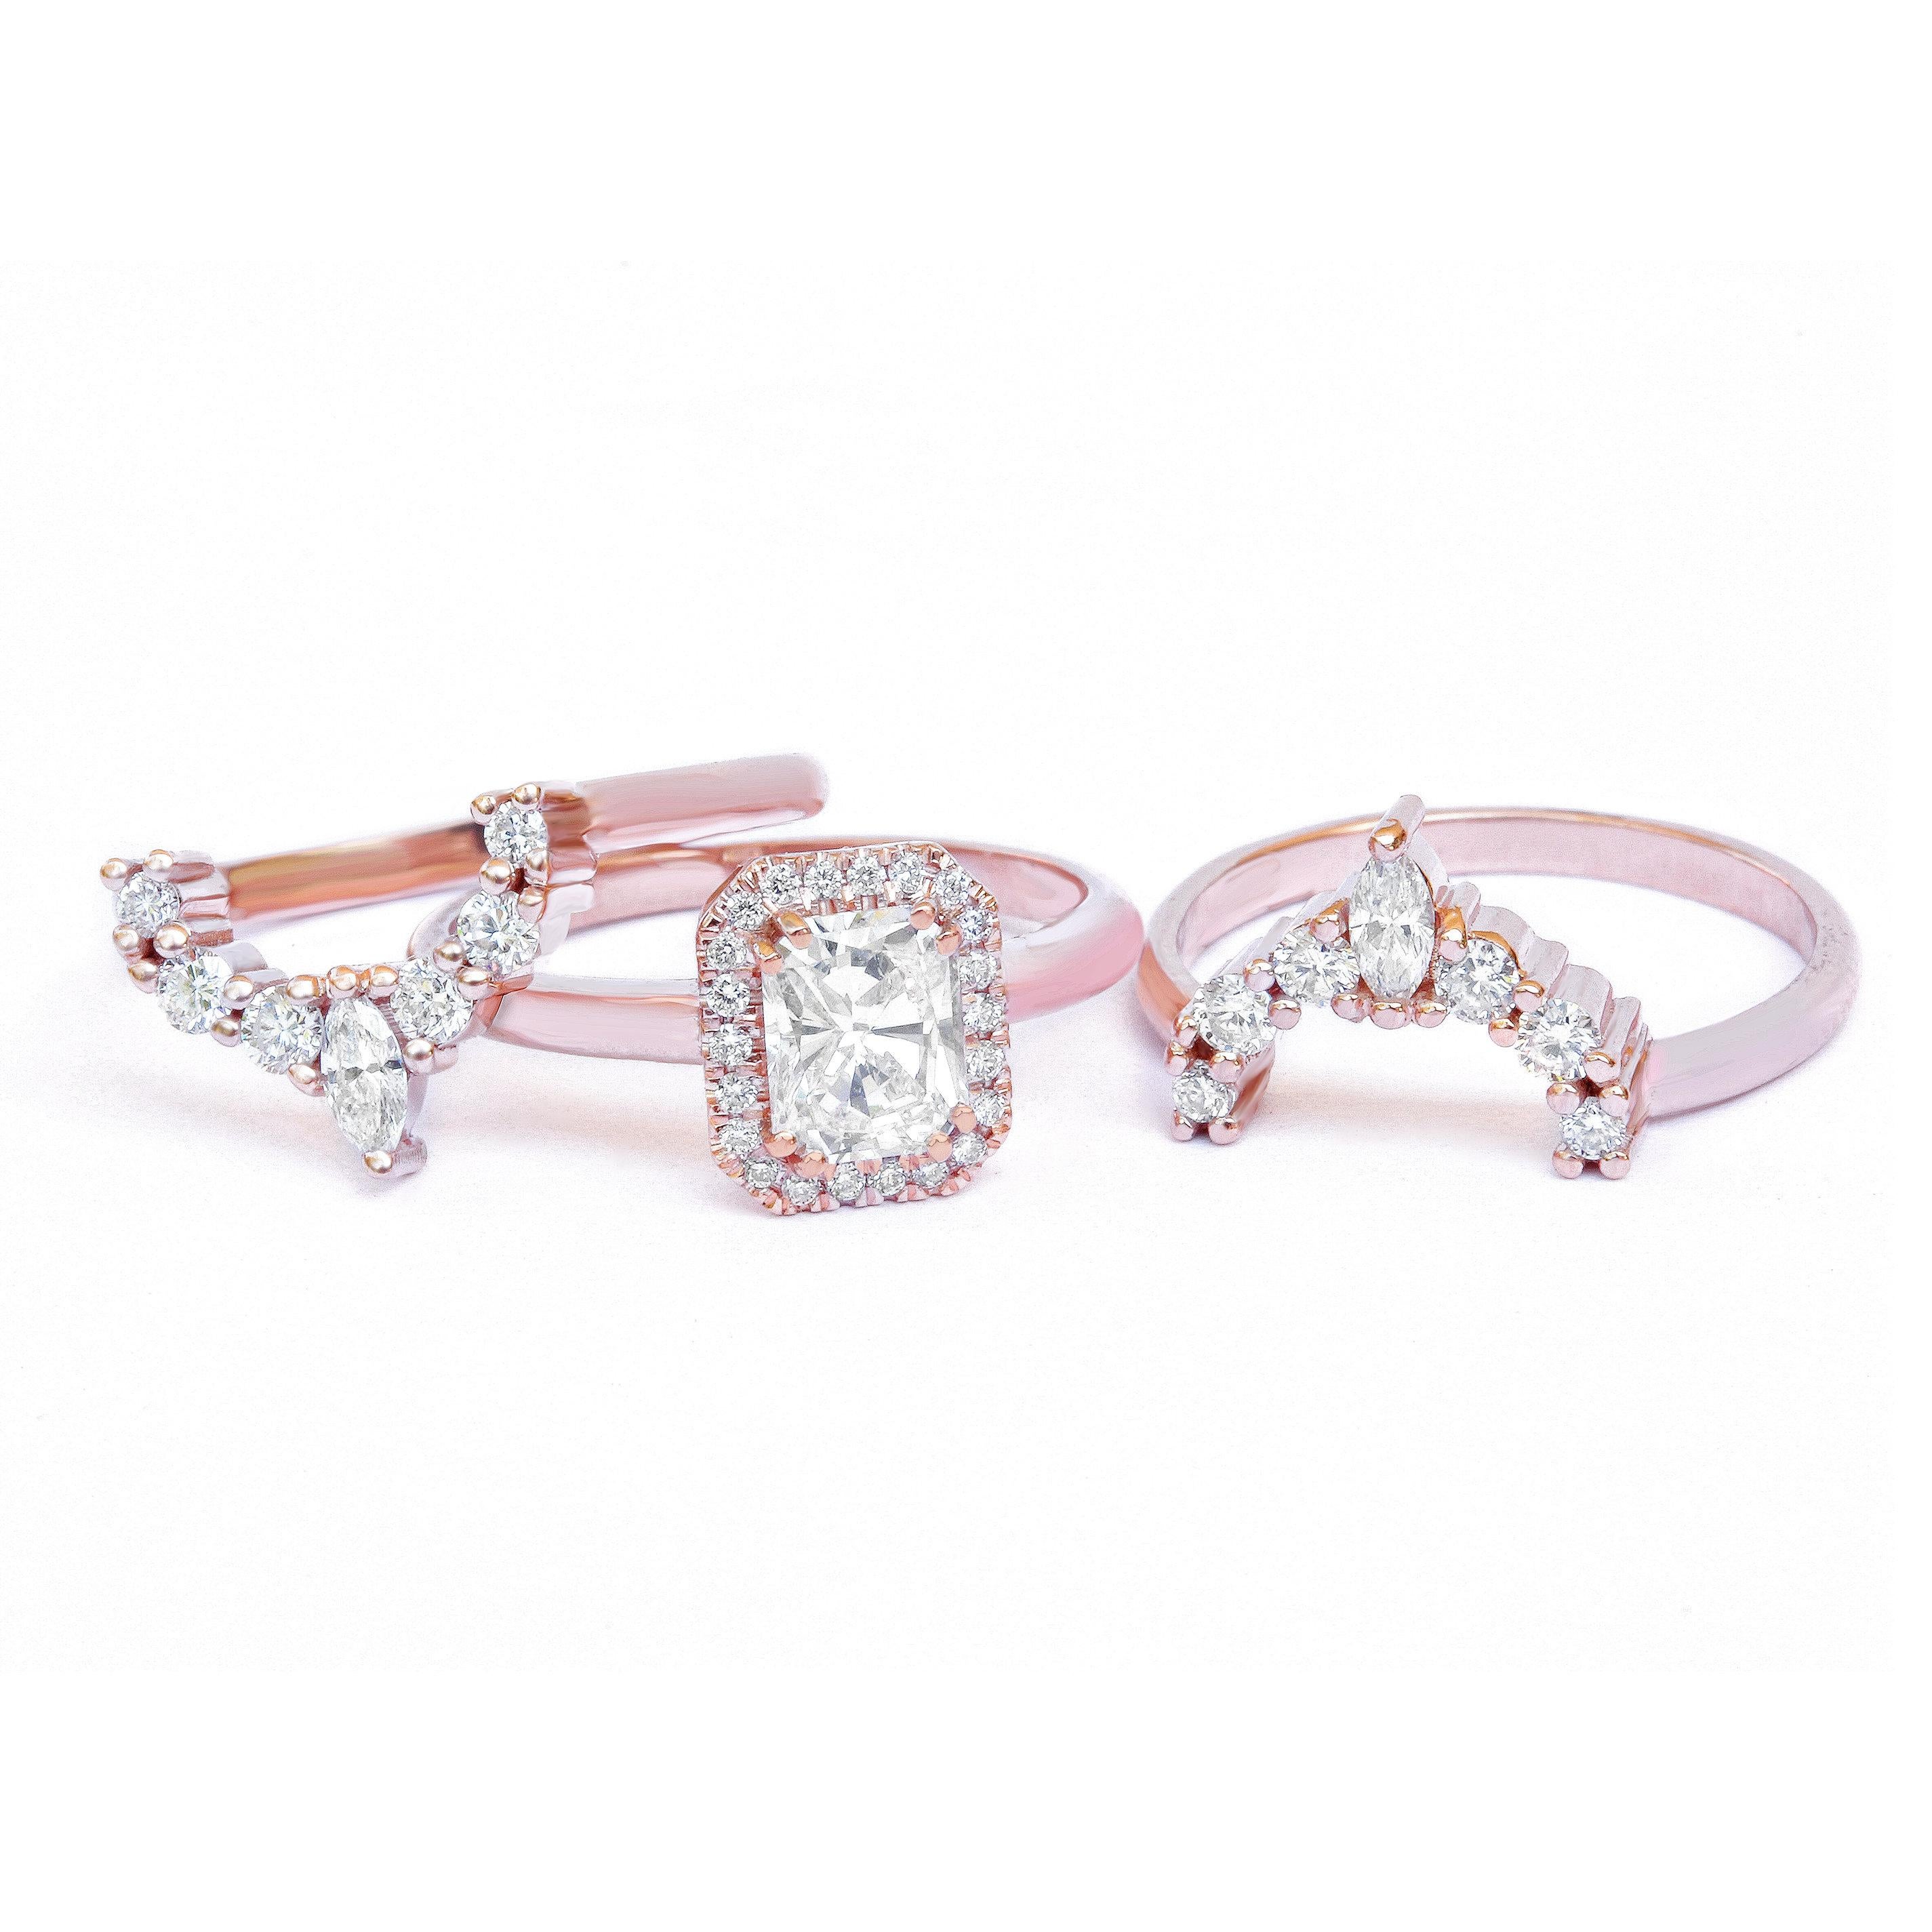 Beautiful Radiant Cut Halo Diamond Engagement Ring - 